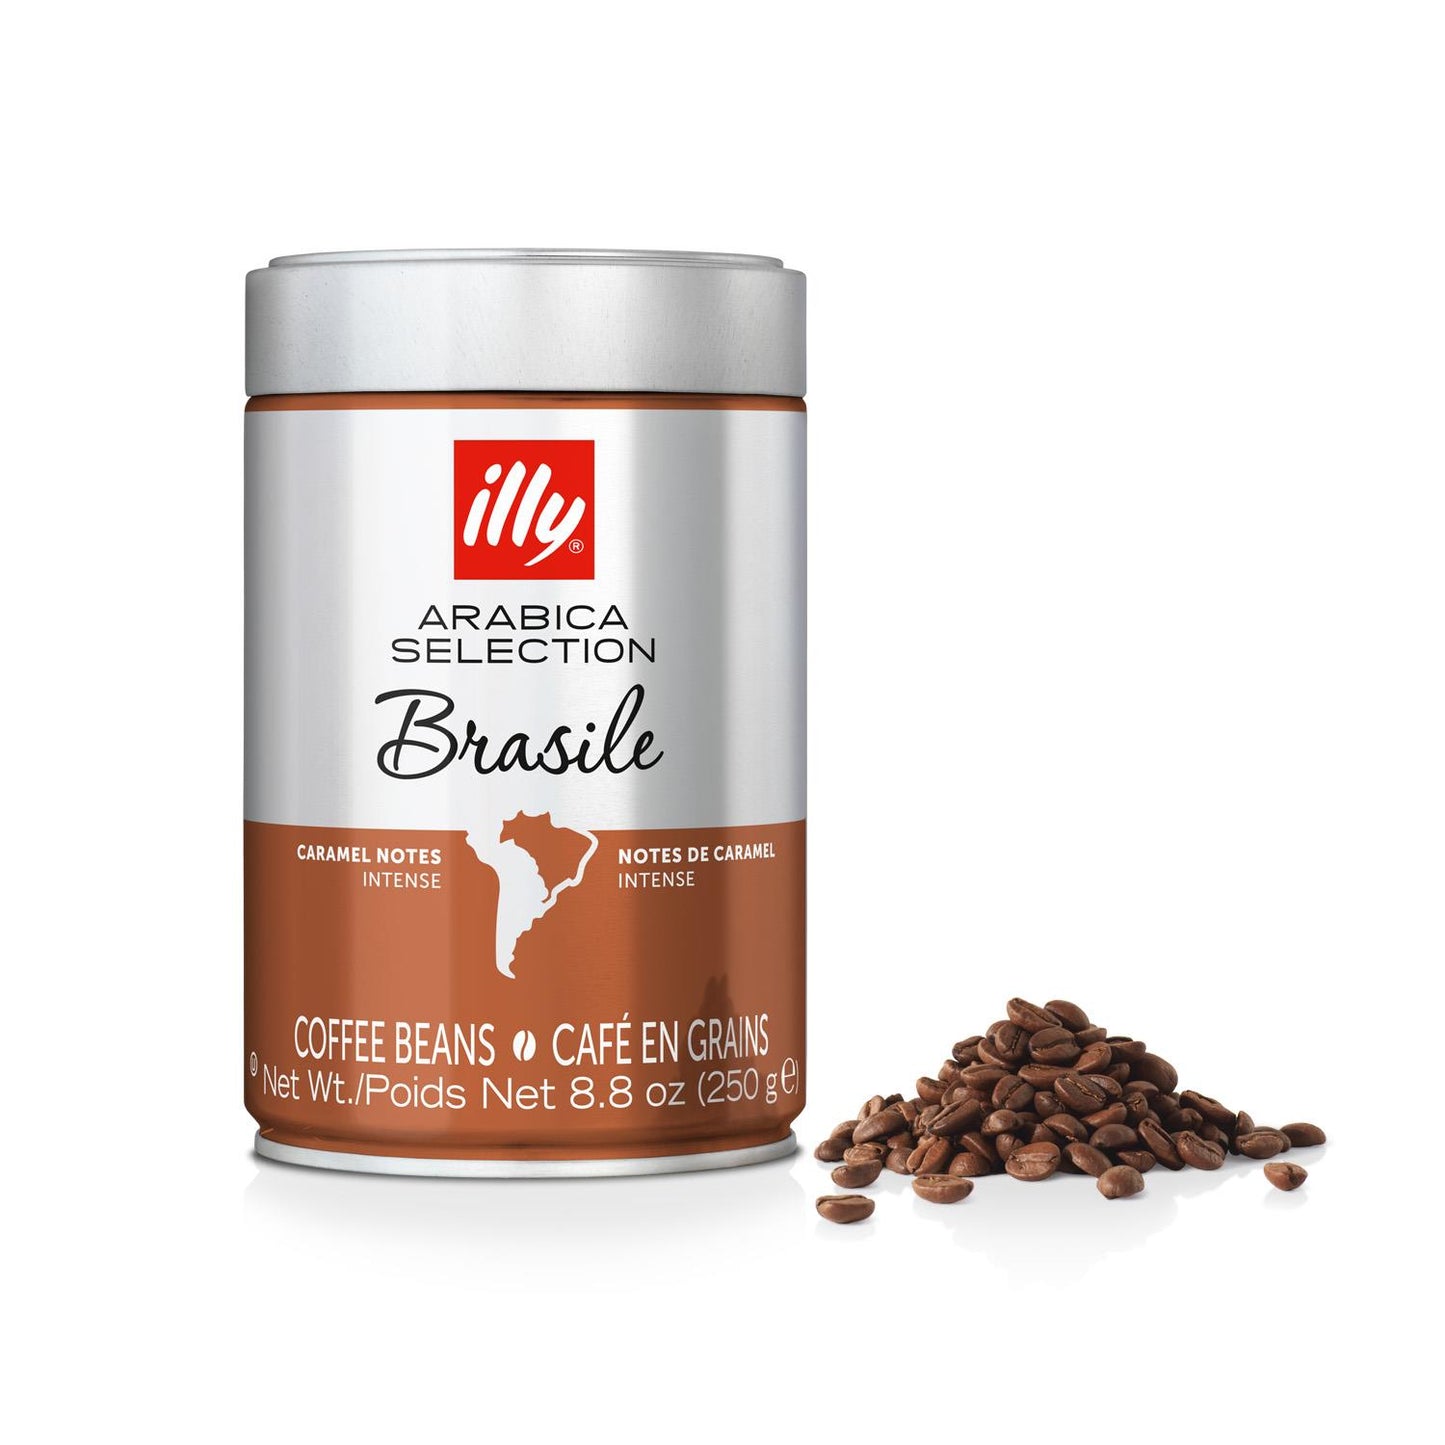 illy Bean Coffee - Brazil 250g